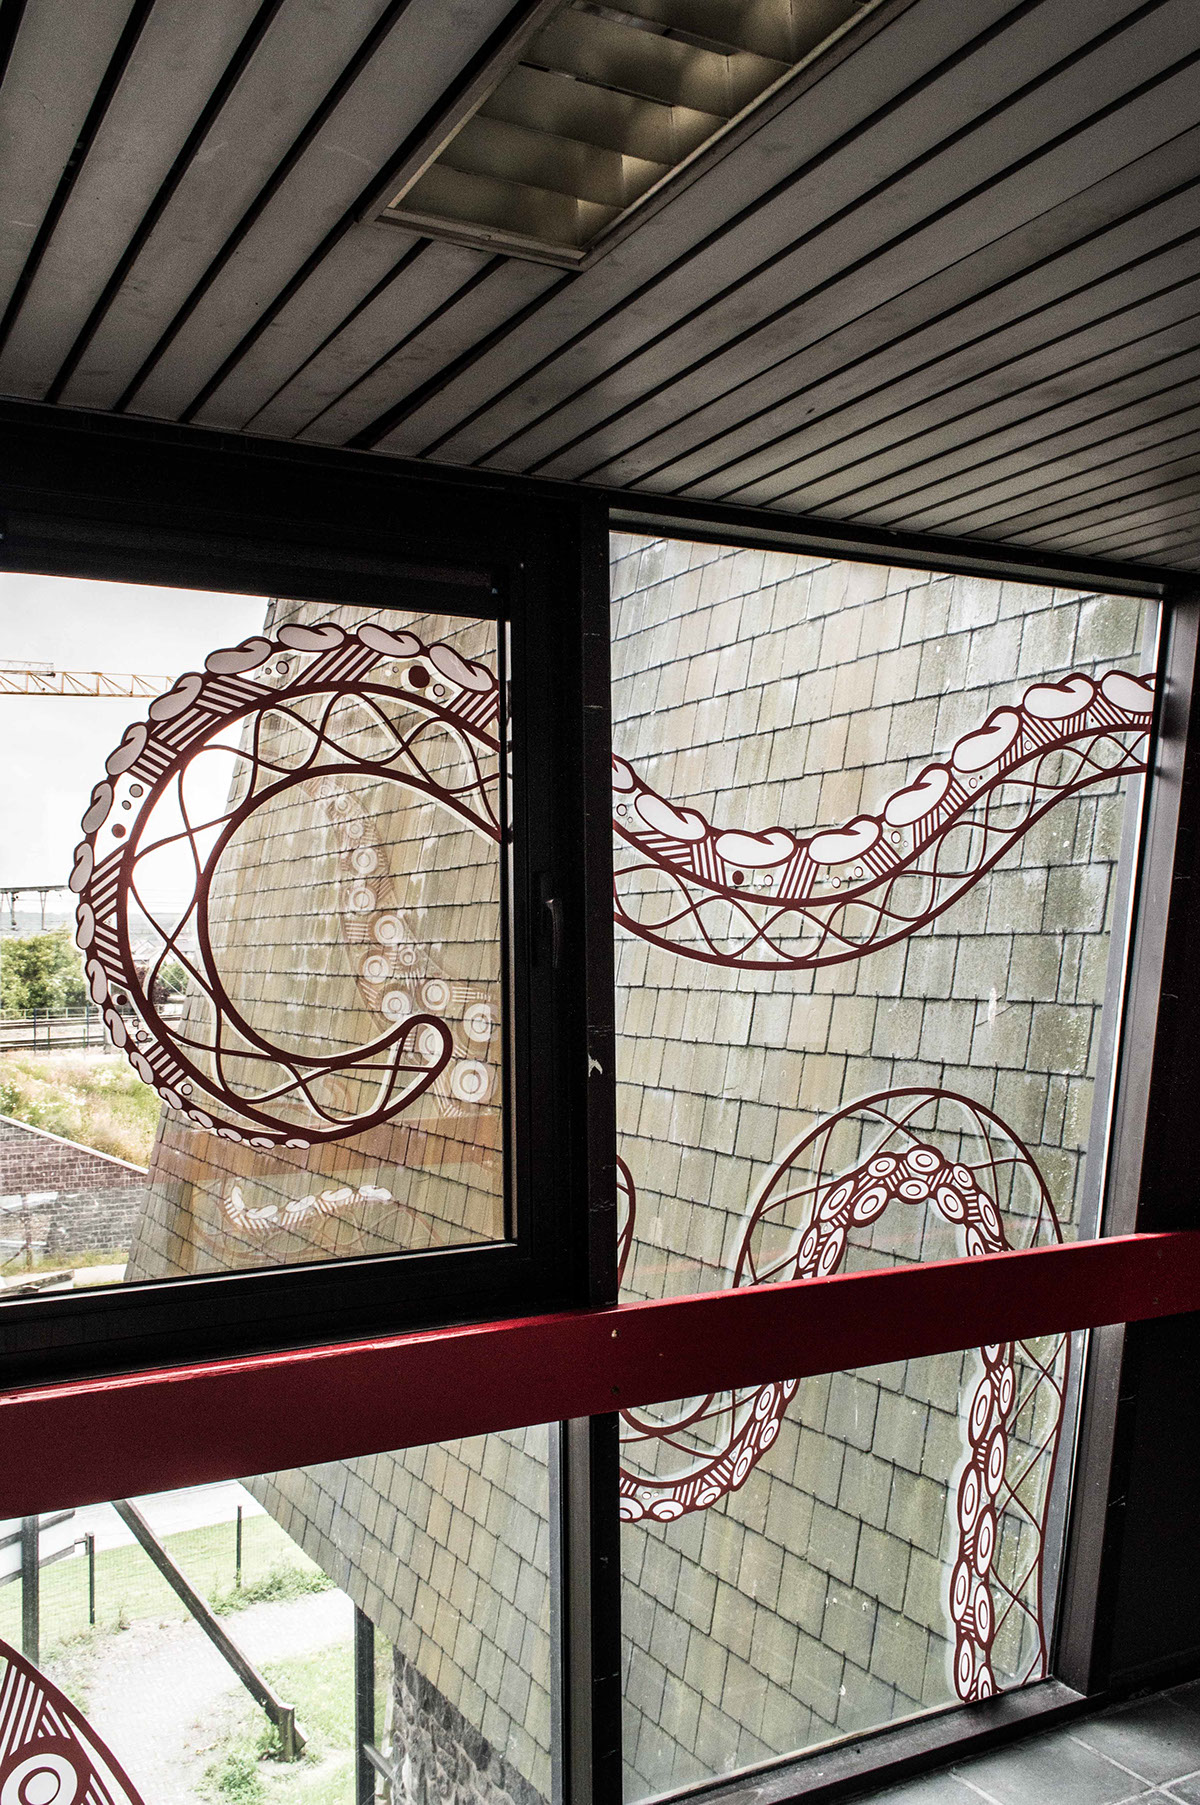 tentacles tentacules invasion Infographie tape vinyl cut Window Archigraphik heroes monster University school study modern